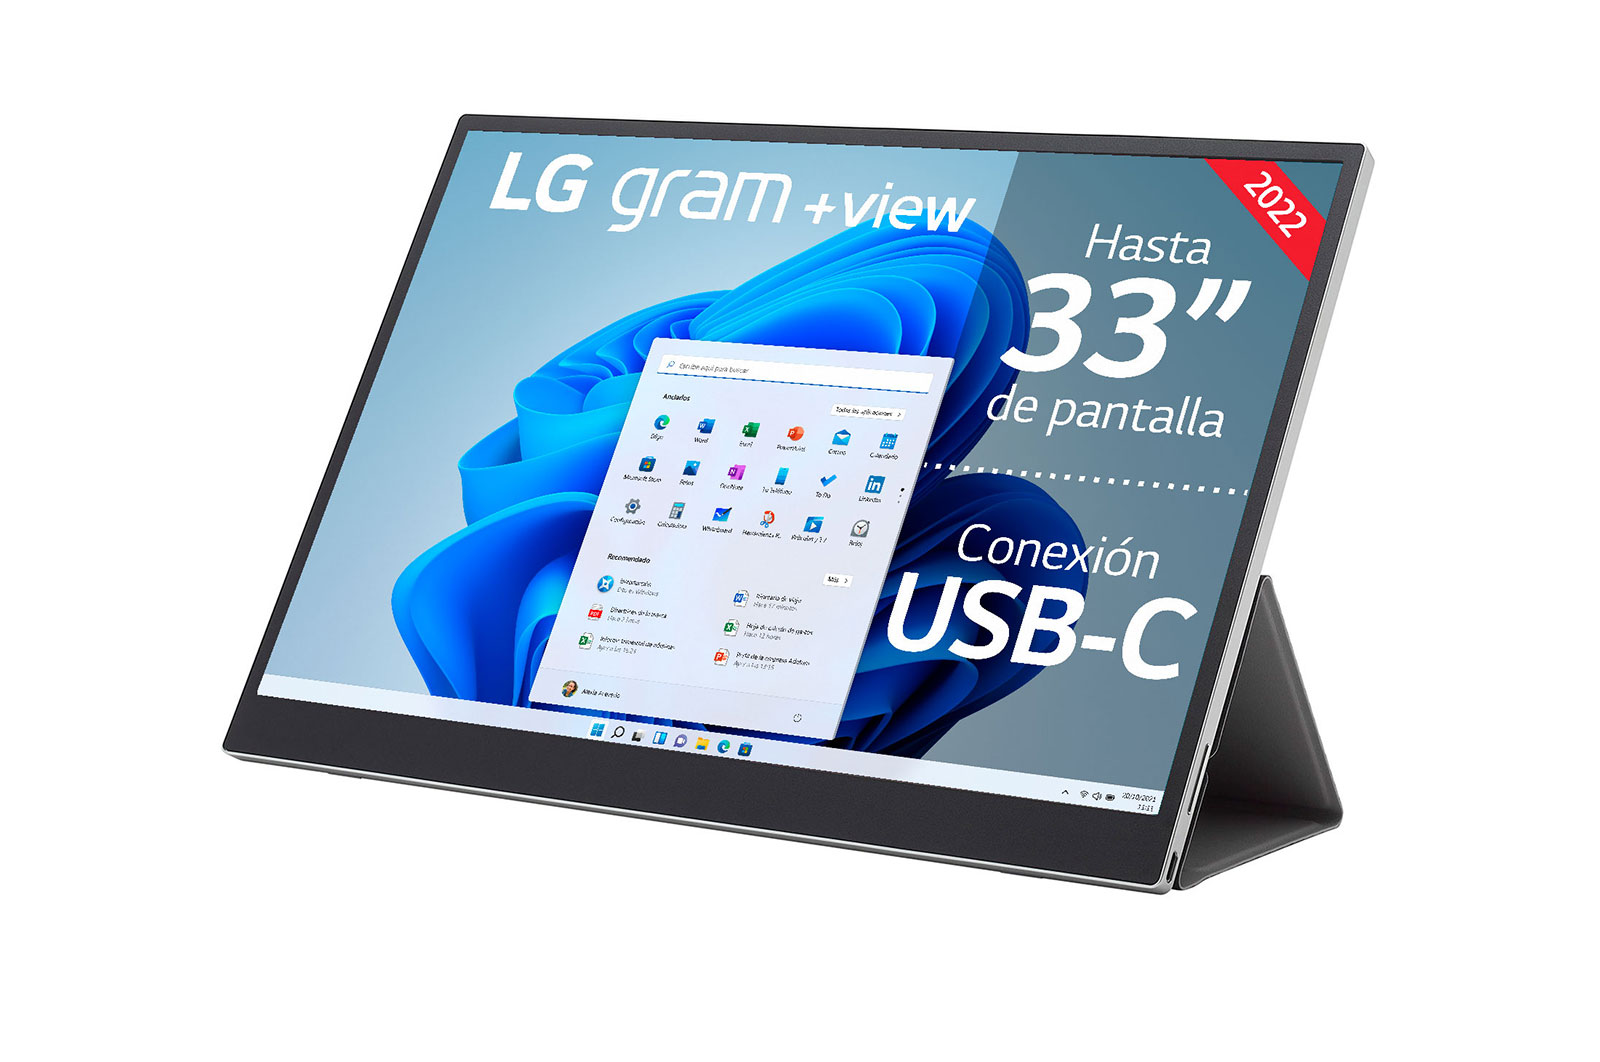 LG gram +view, un monitor muy ligero para complementar tu portátil 6